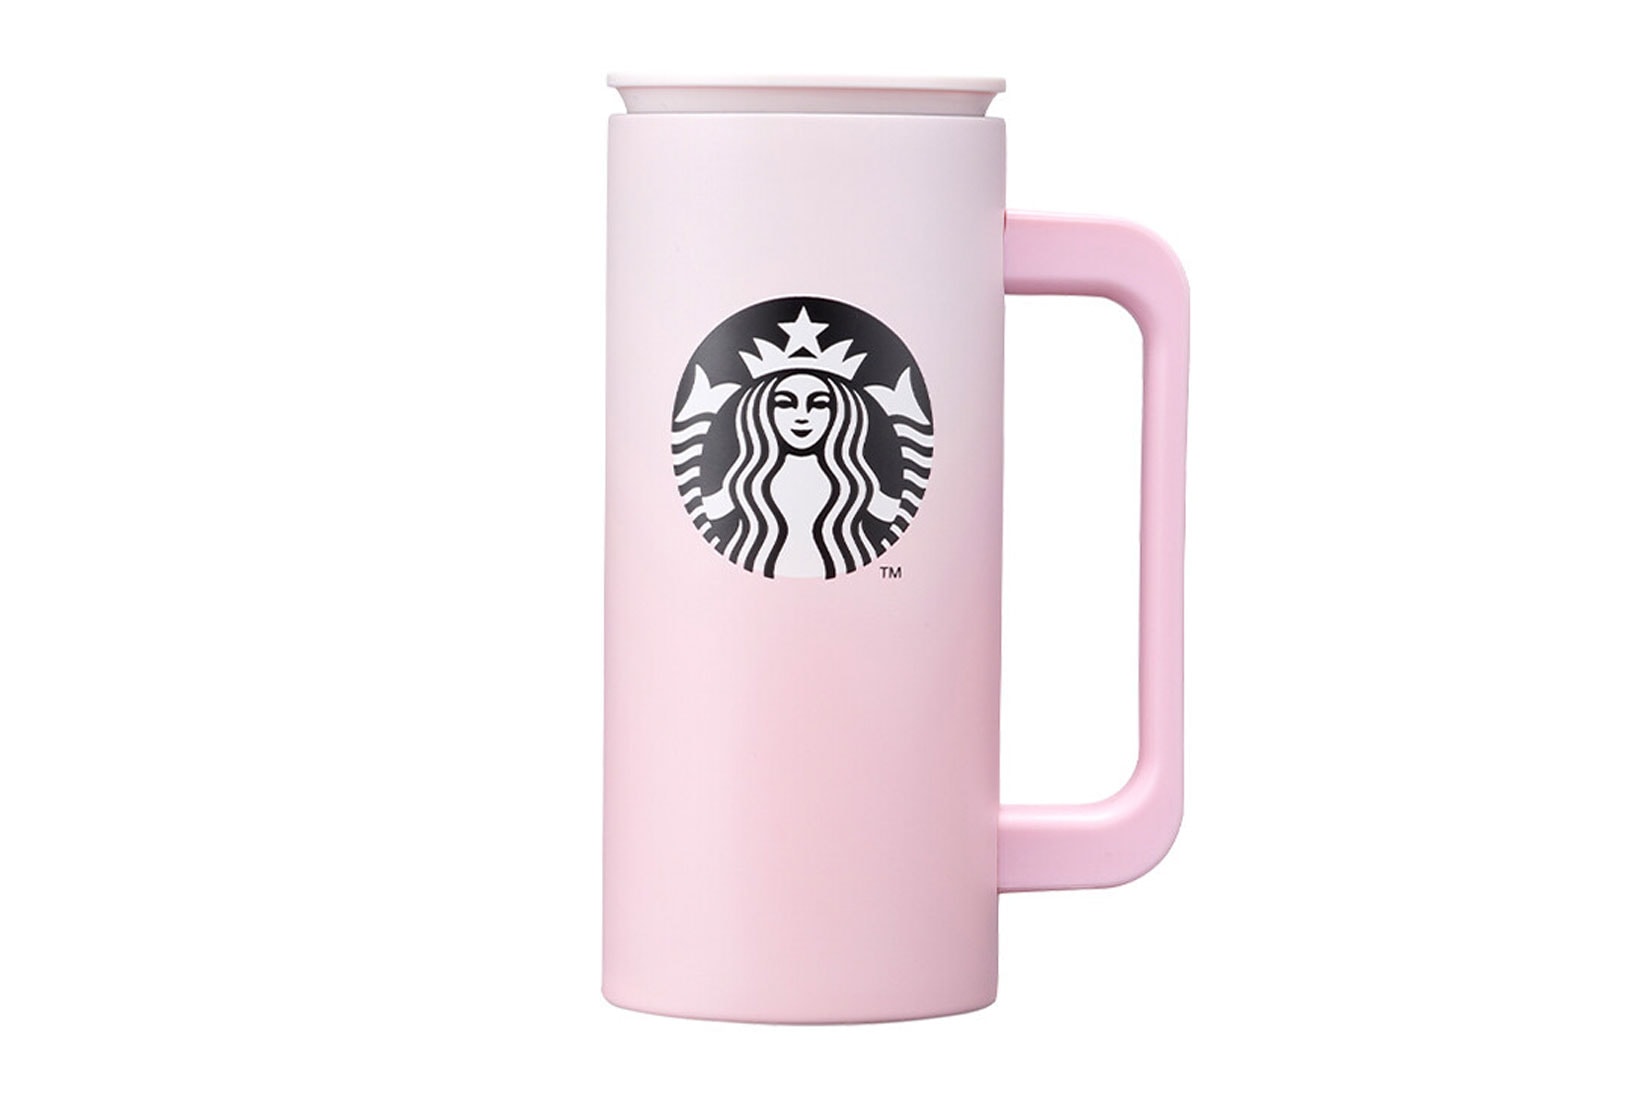 starbucks korea valentines day merch collection pink newton tumbler cup